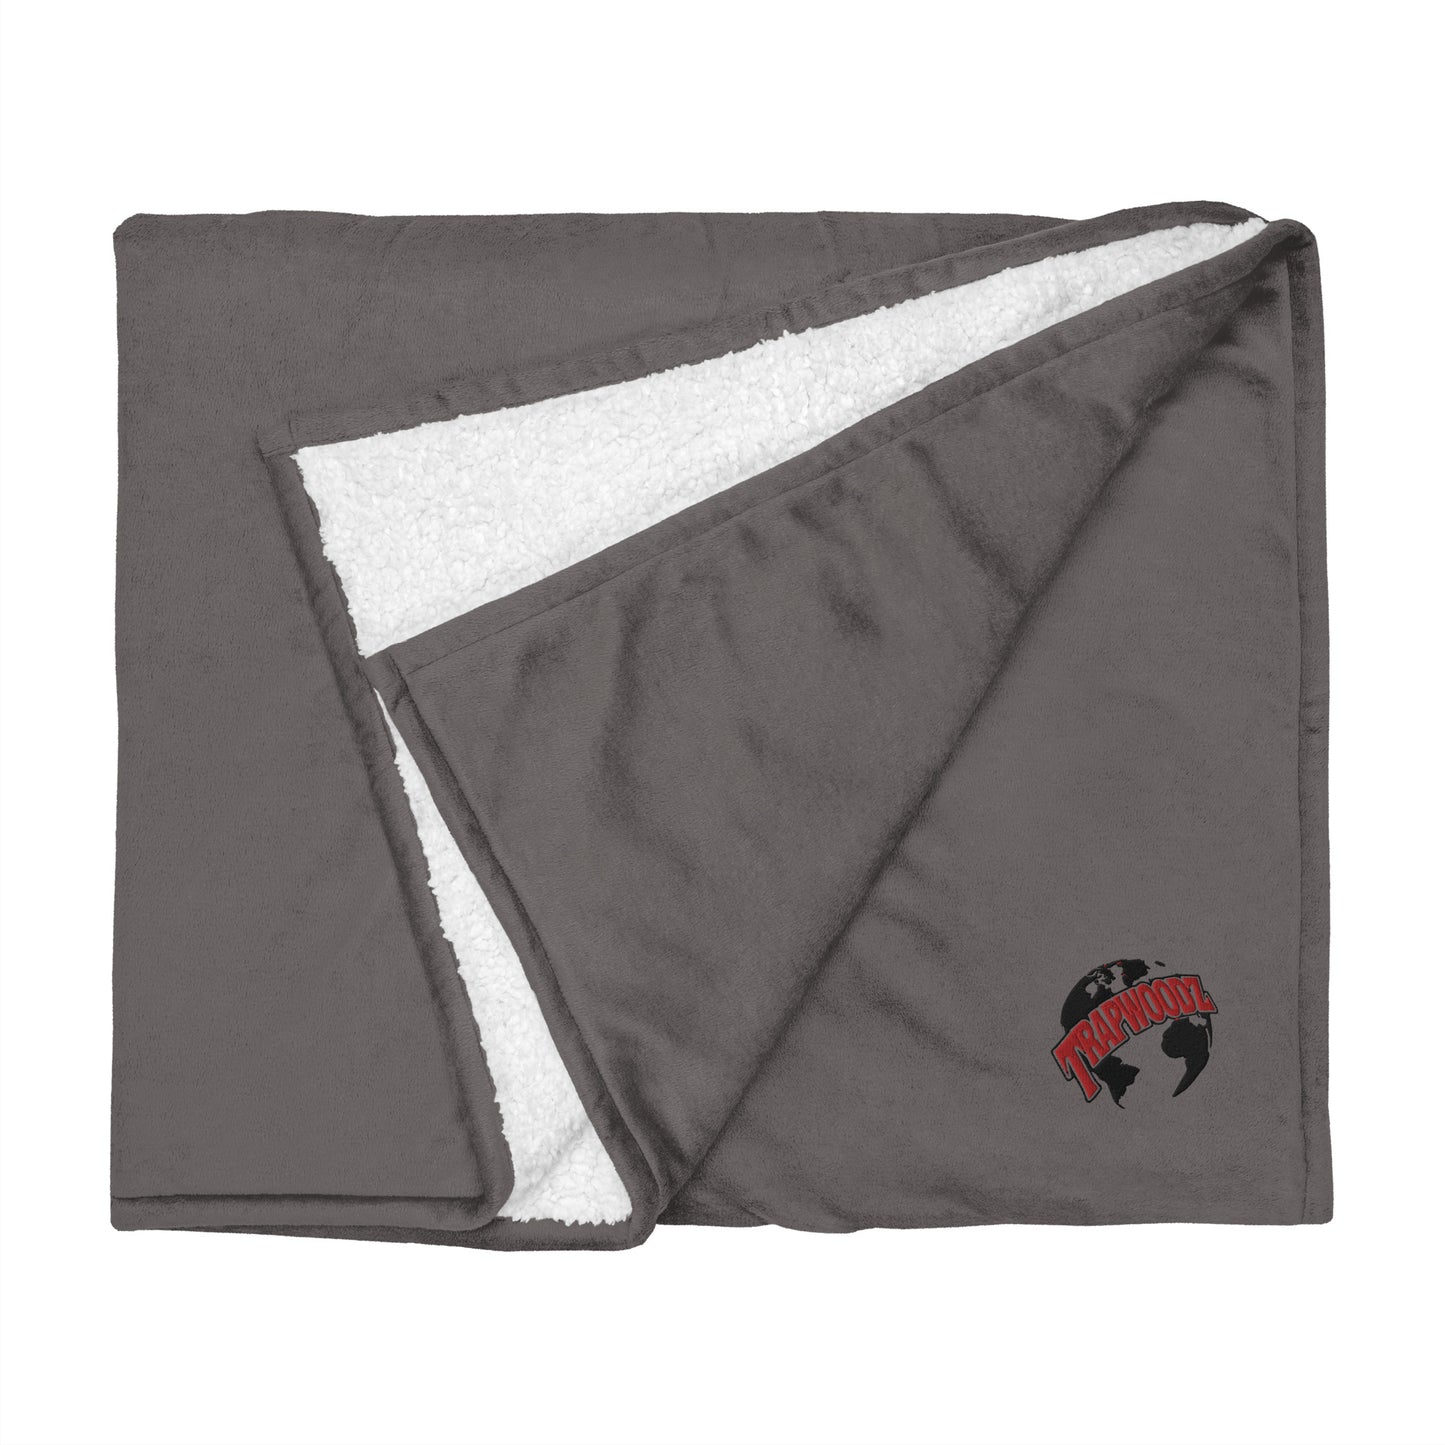 Trapwoodz Premium sherpa blanket